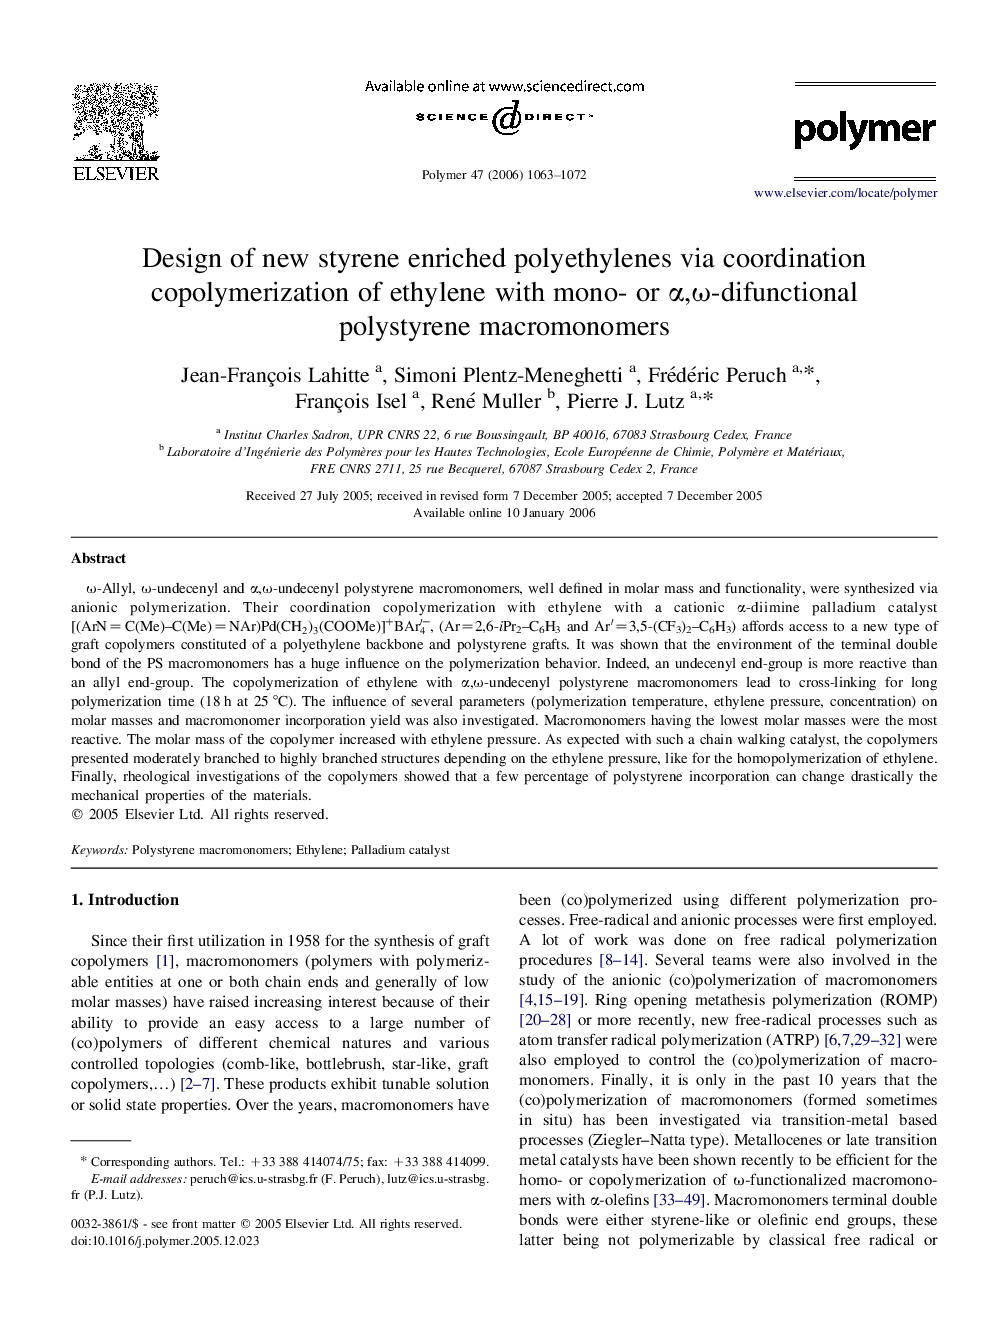 Design of new styrene enriched polyethylenes via coordination copolymerization of ethylene with mono- or Î±,Ï-difunctional polystyrene macromonomers